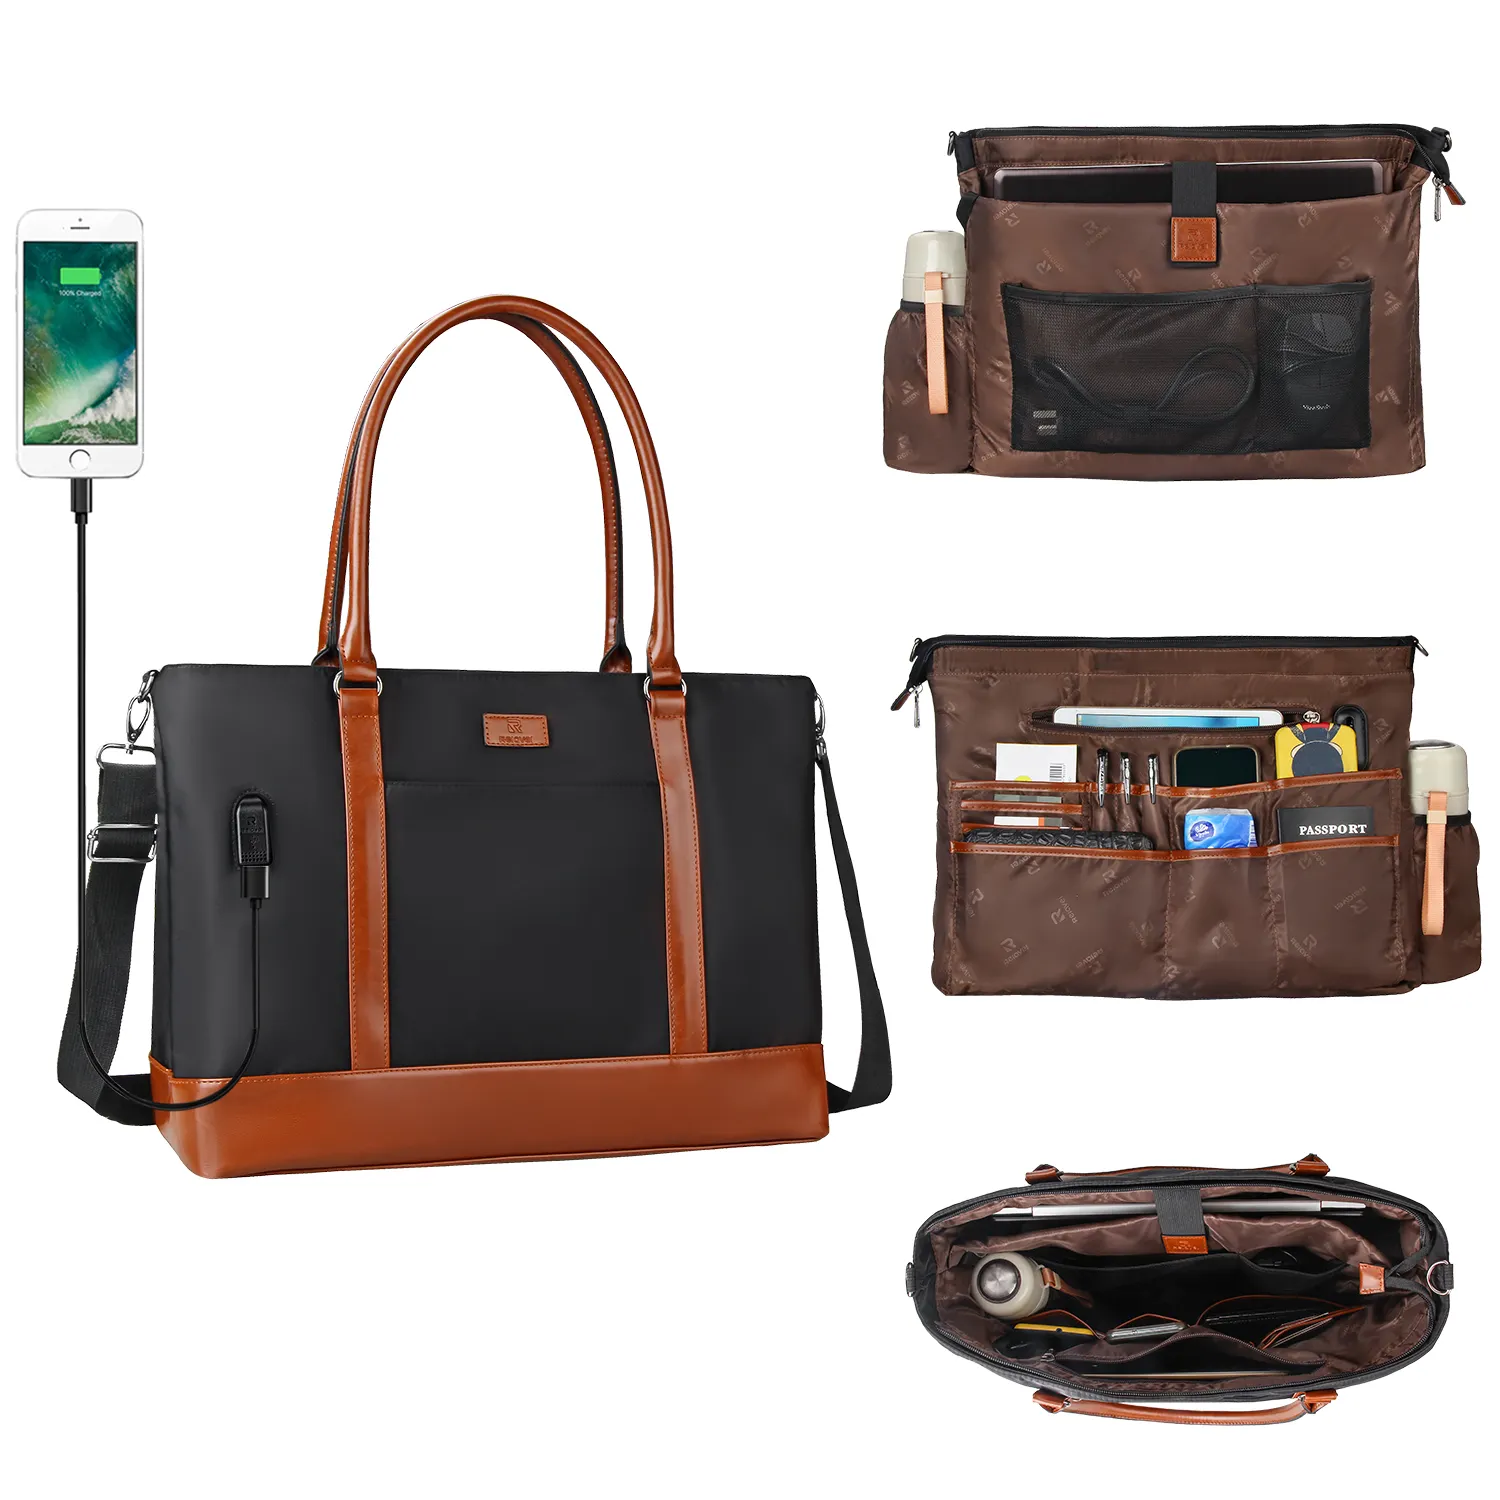 Relavel Black Brown Laptop Tote Bag for Men and Women Teacher School USB Briefcase Travel Fits 17.1 inch laptop Handbags